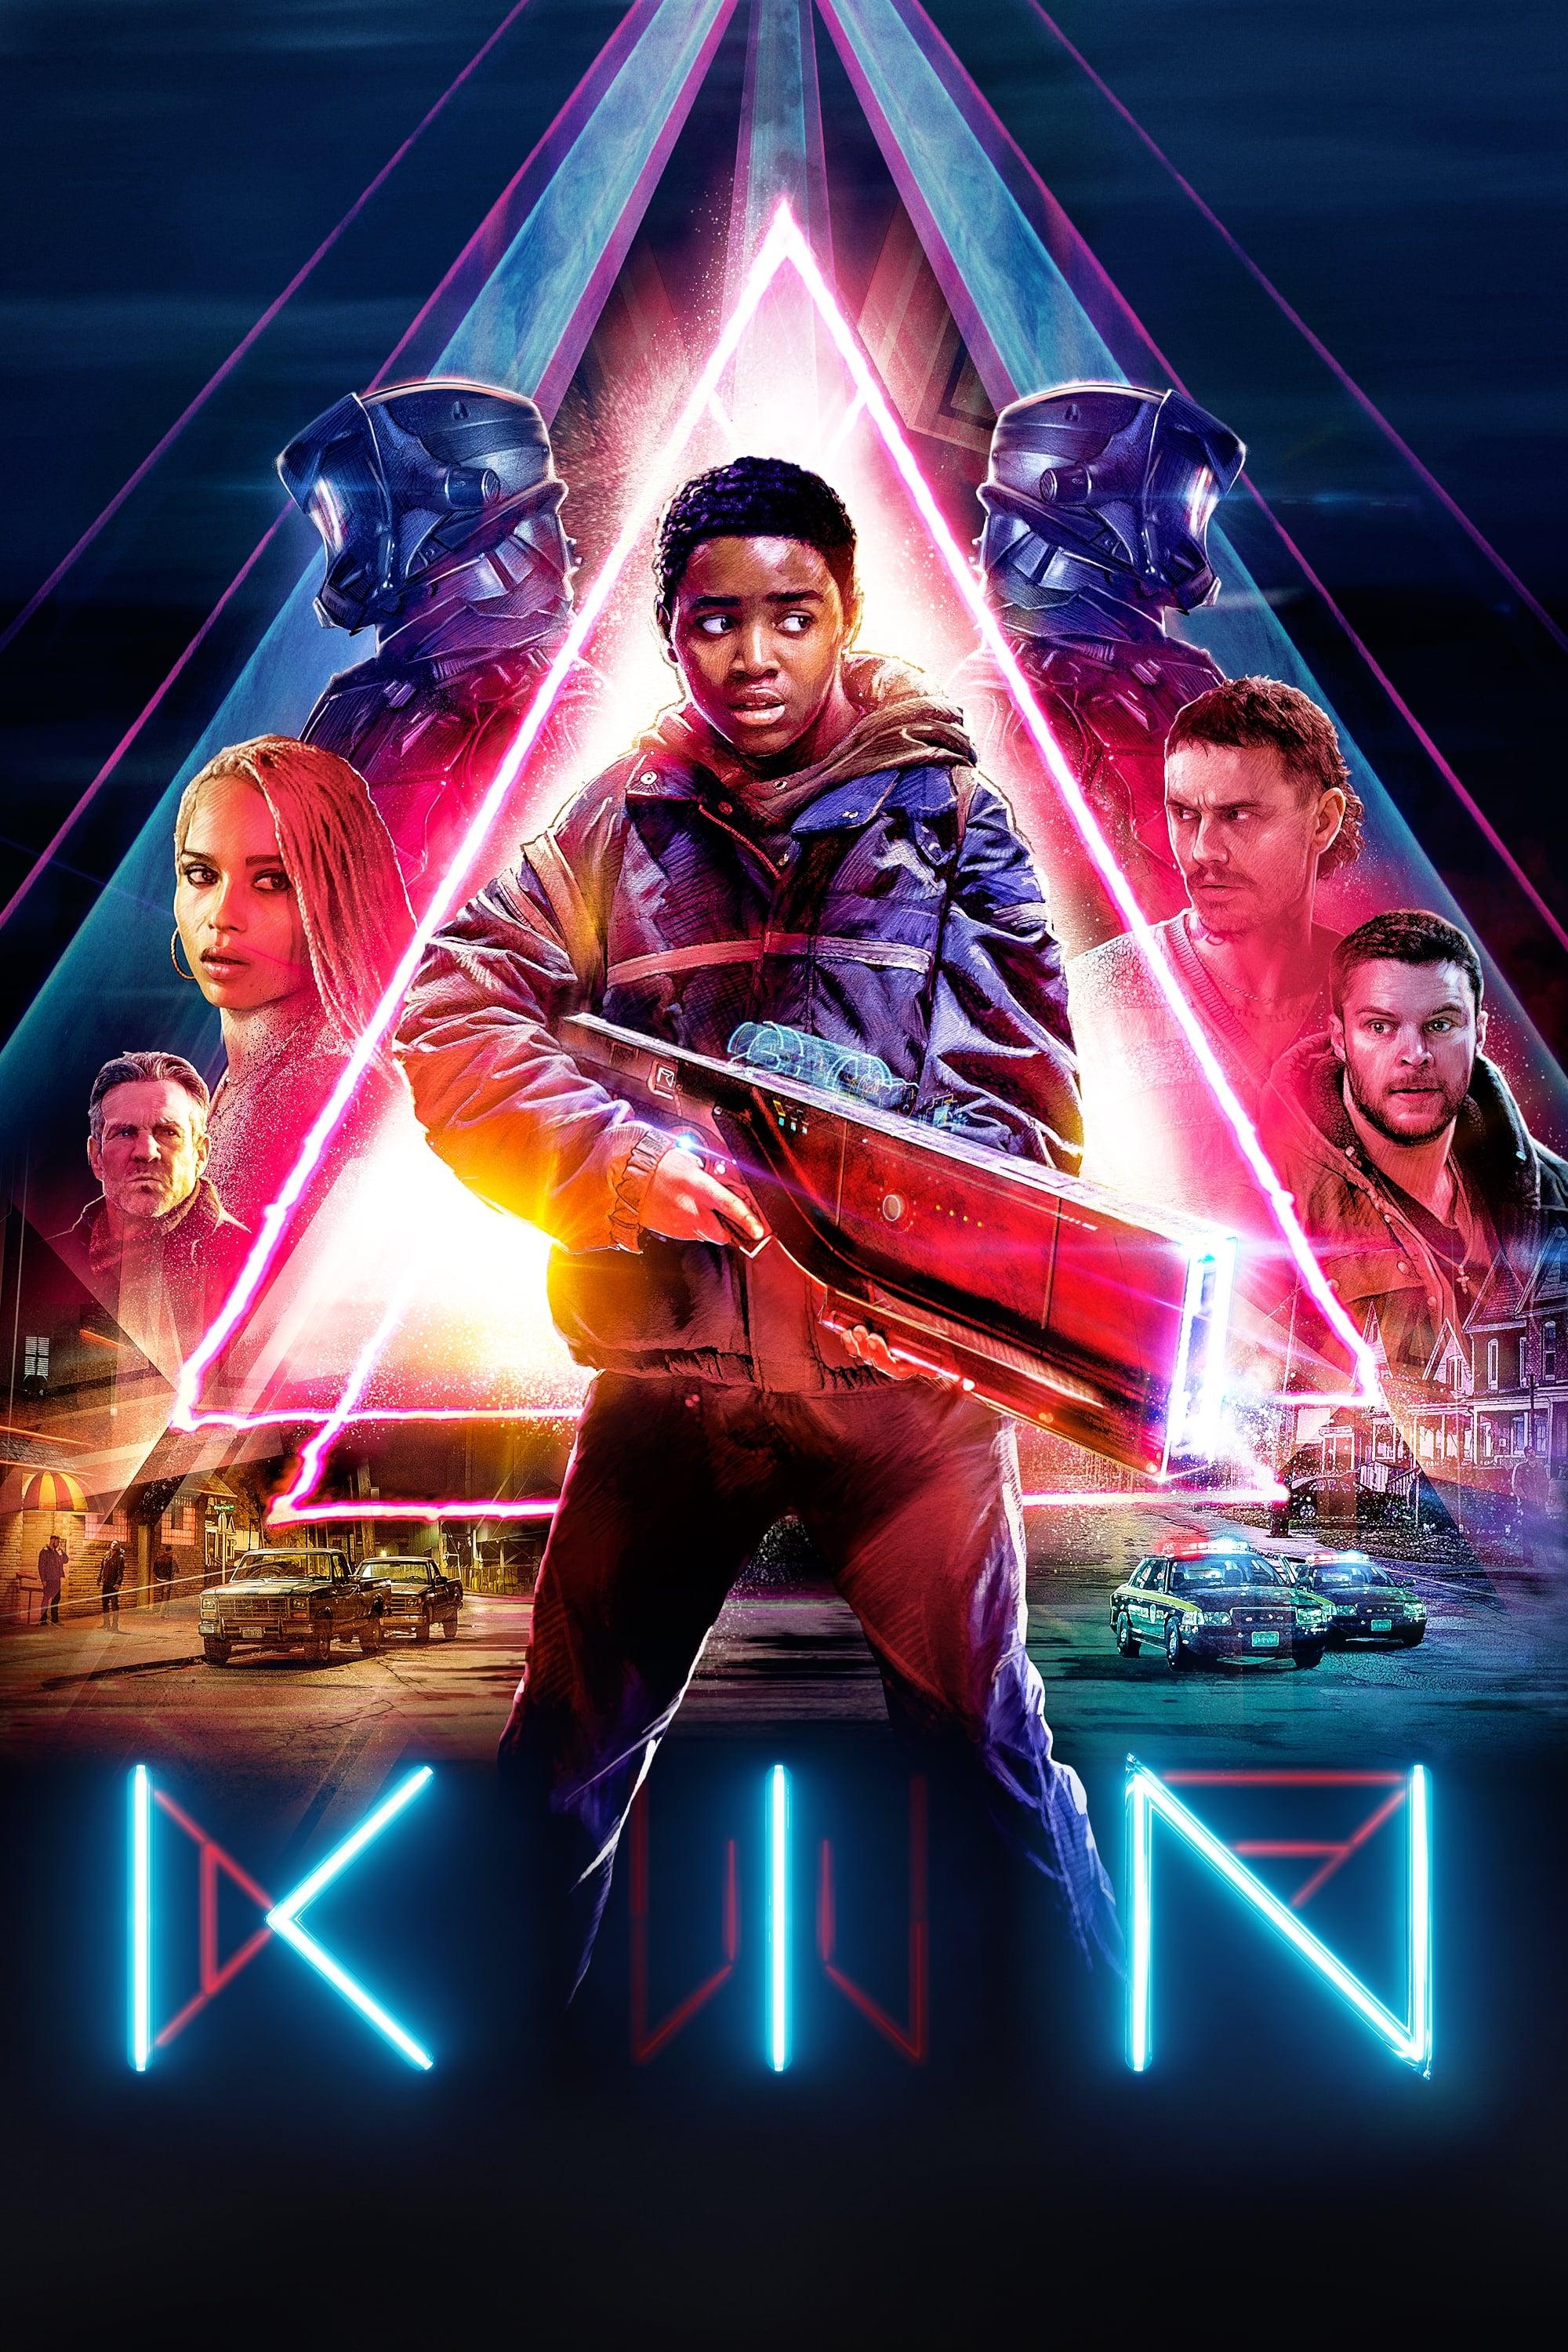 Kin poster